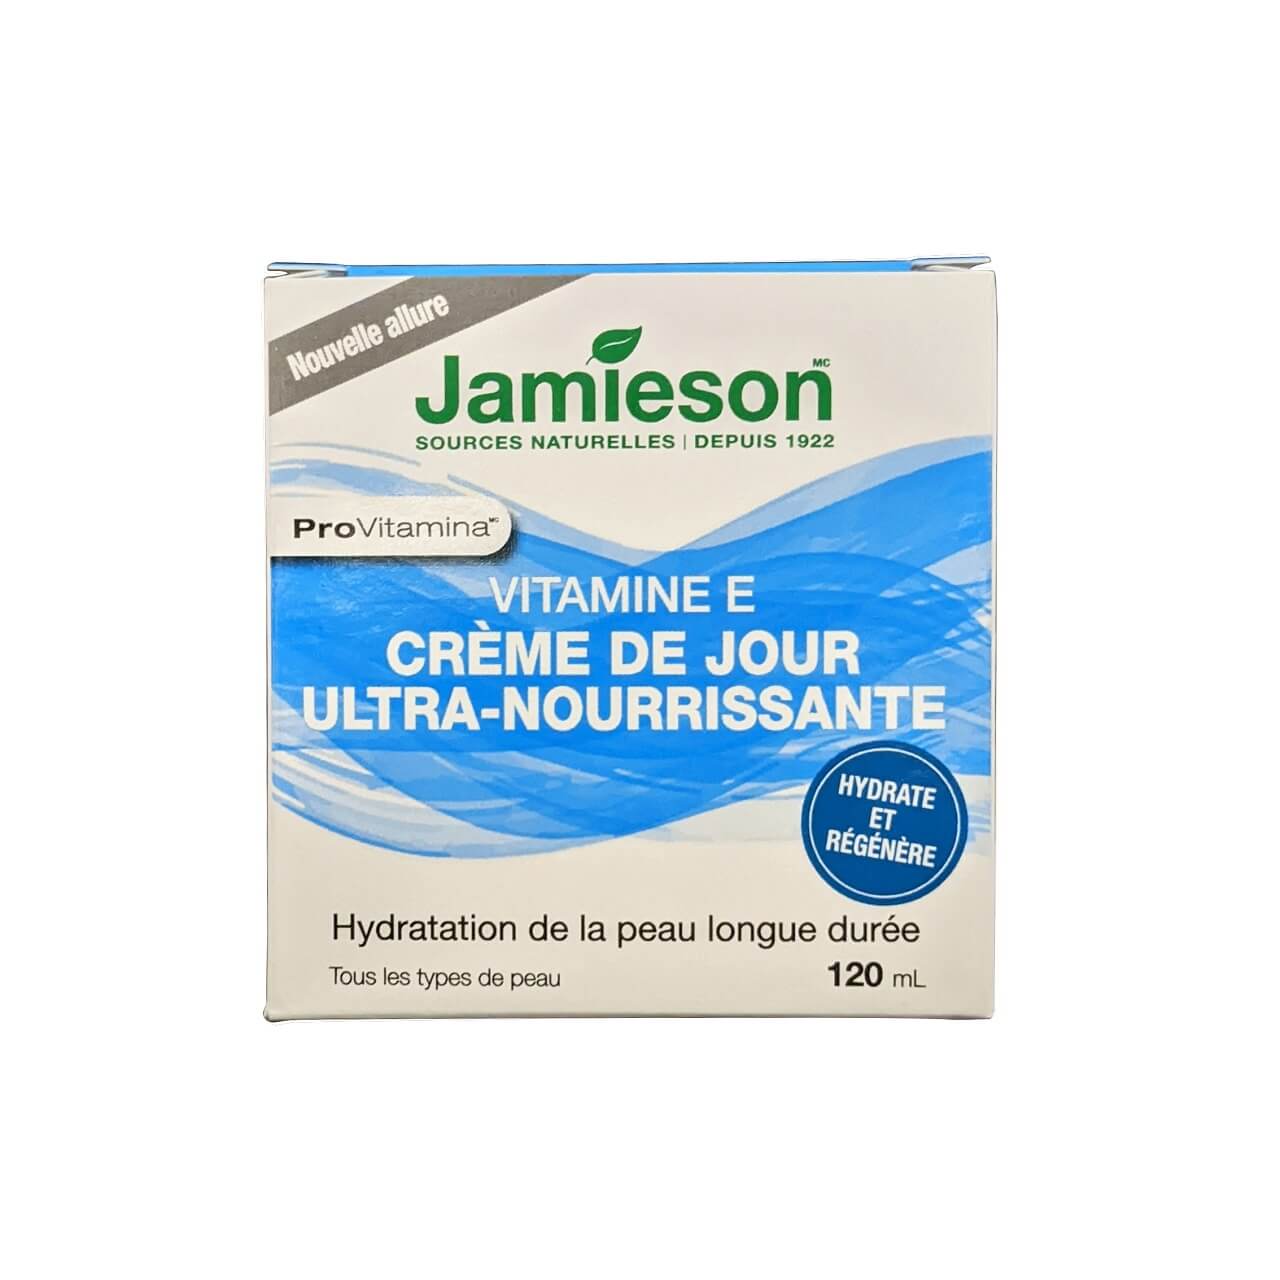 Product label for Jamieson ProVitamina Vitamin E Deep Nourishing Day Cream (120 mL) in French